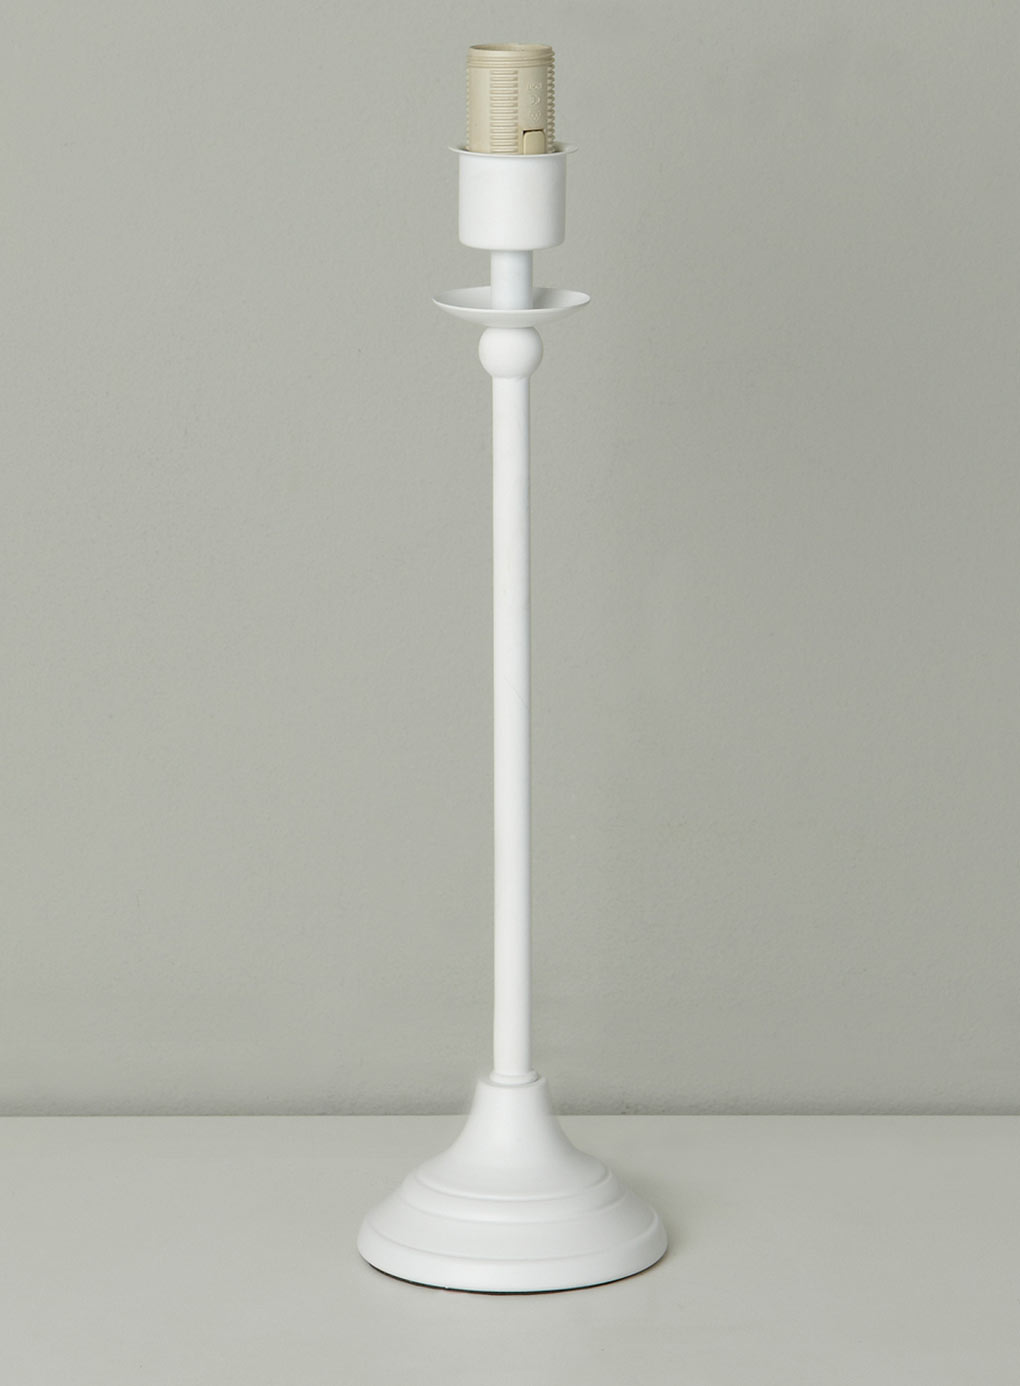 white lamp table photo - 10